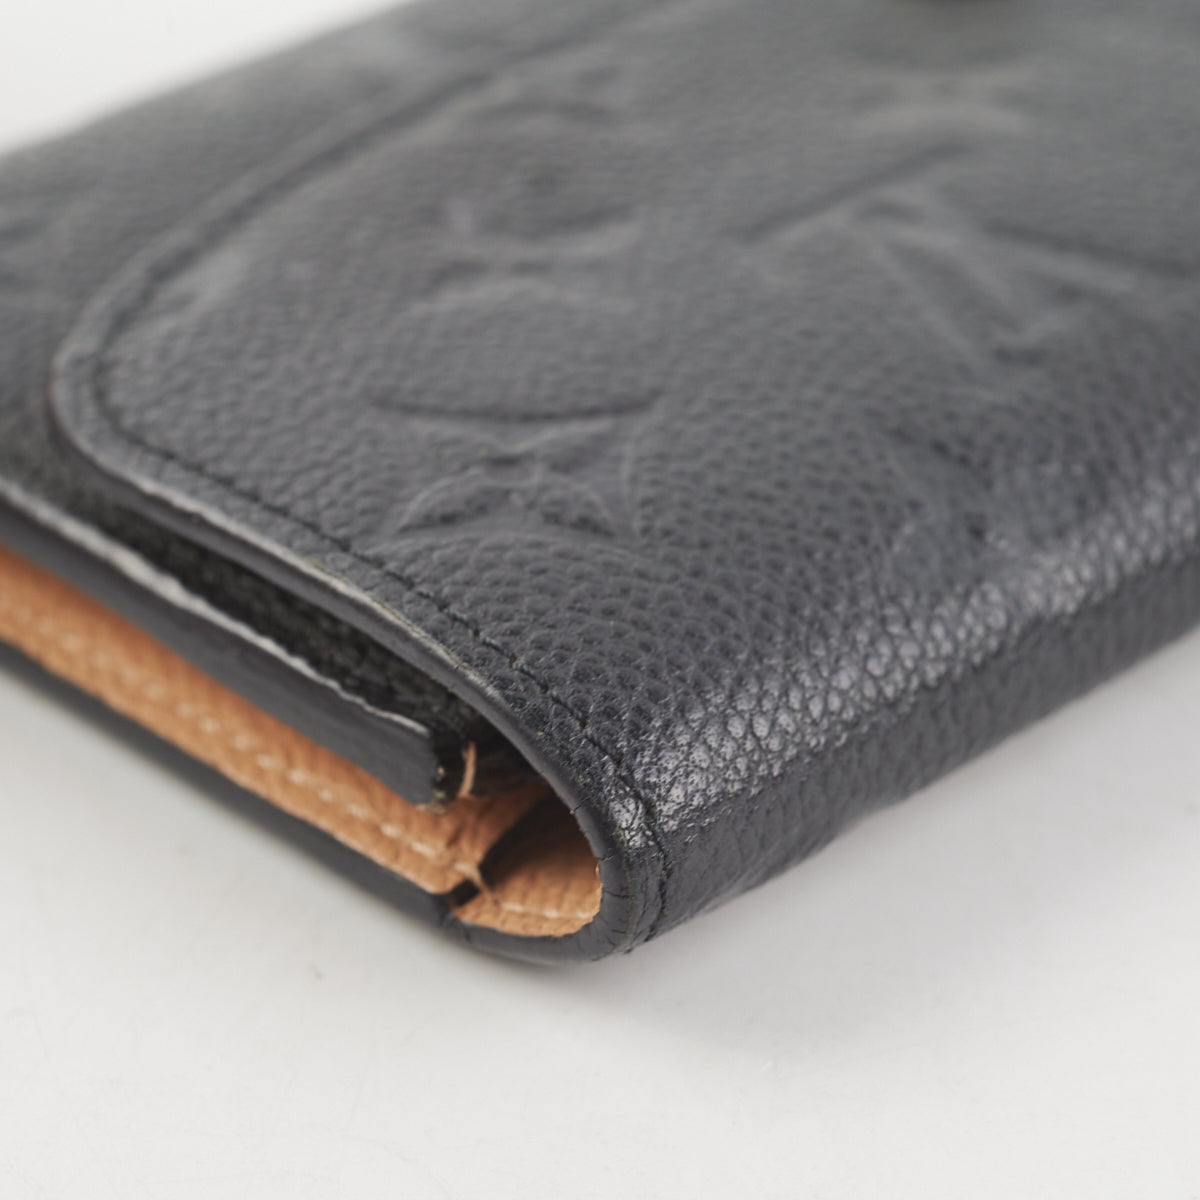 Emilie cloth wallet Louis Vuitton Brown in Cloth - 36535336